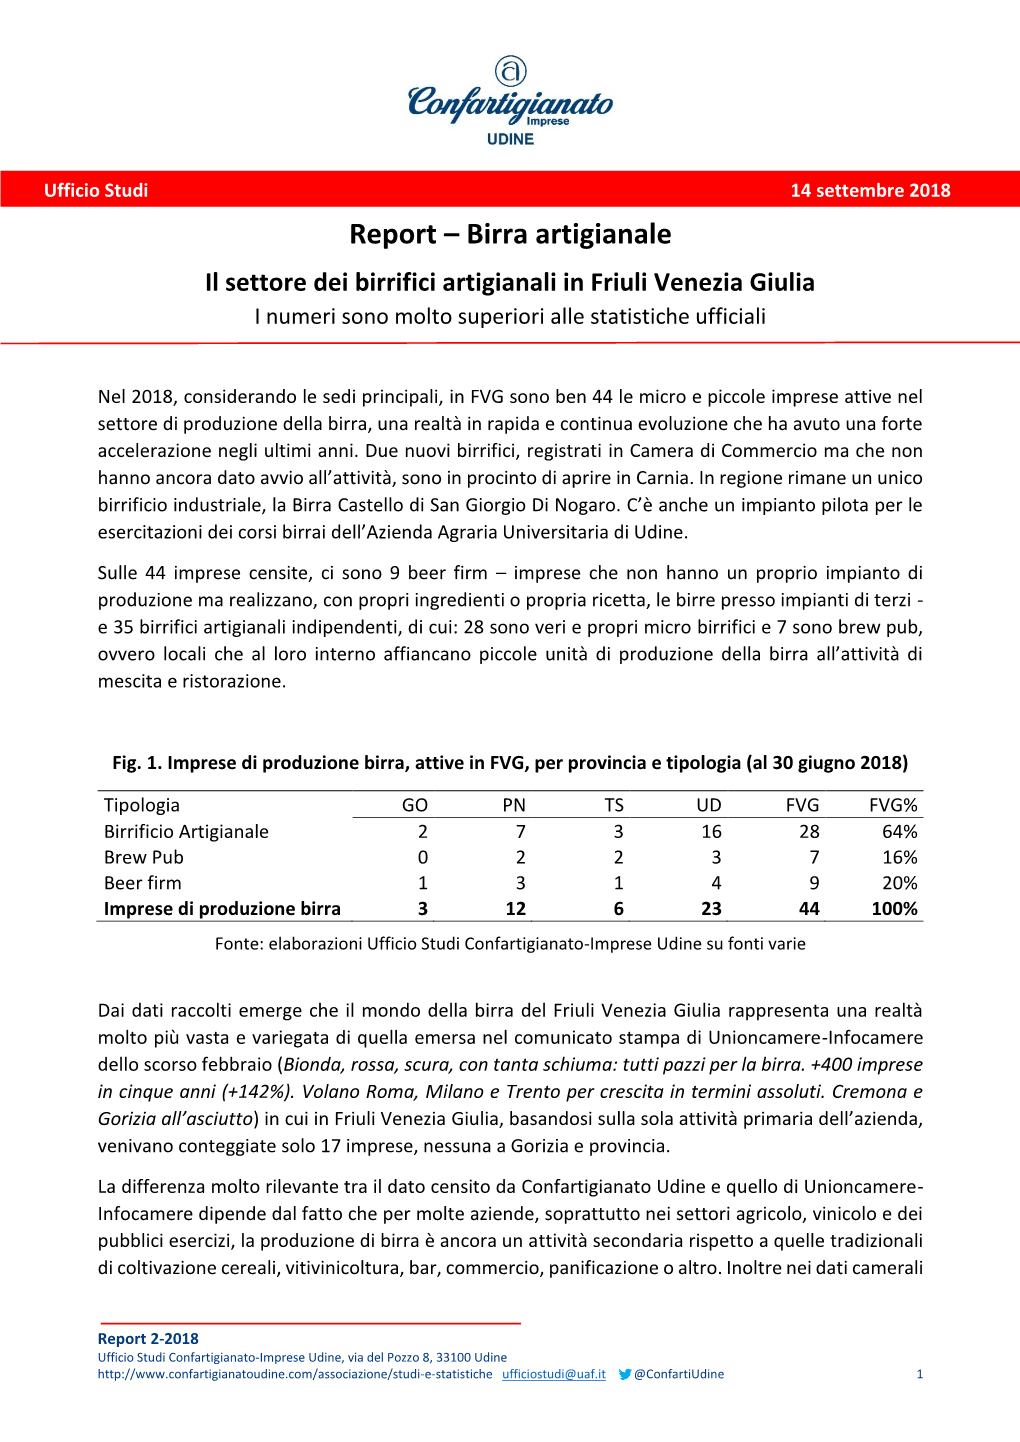 Report 2-2018 Birra Artigianale